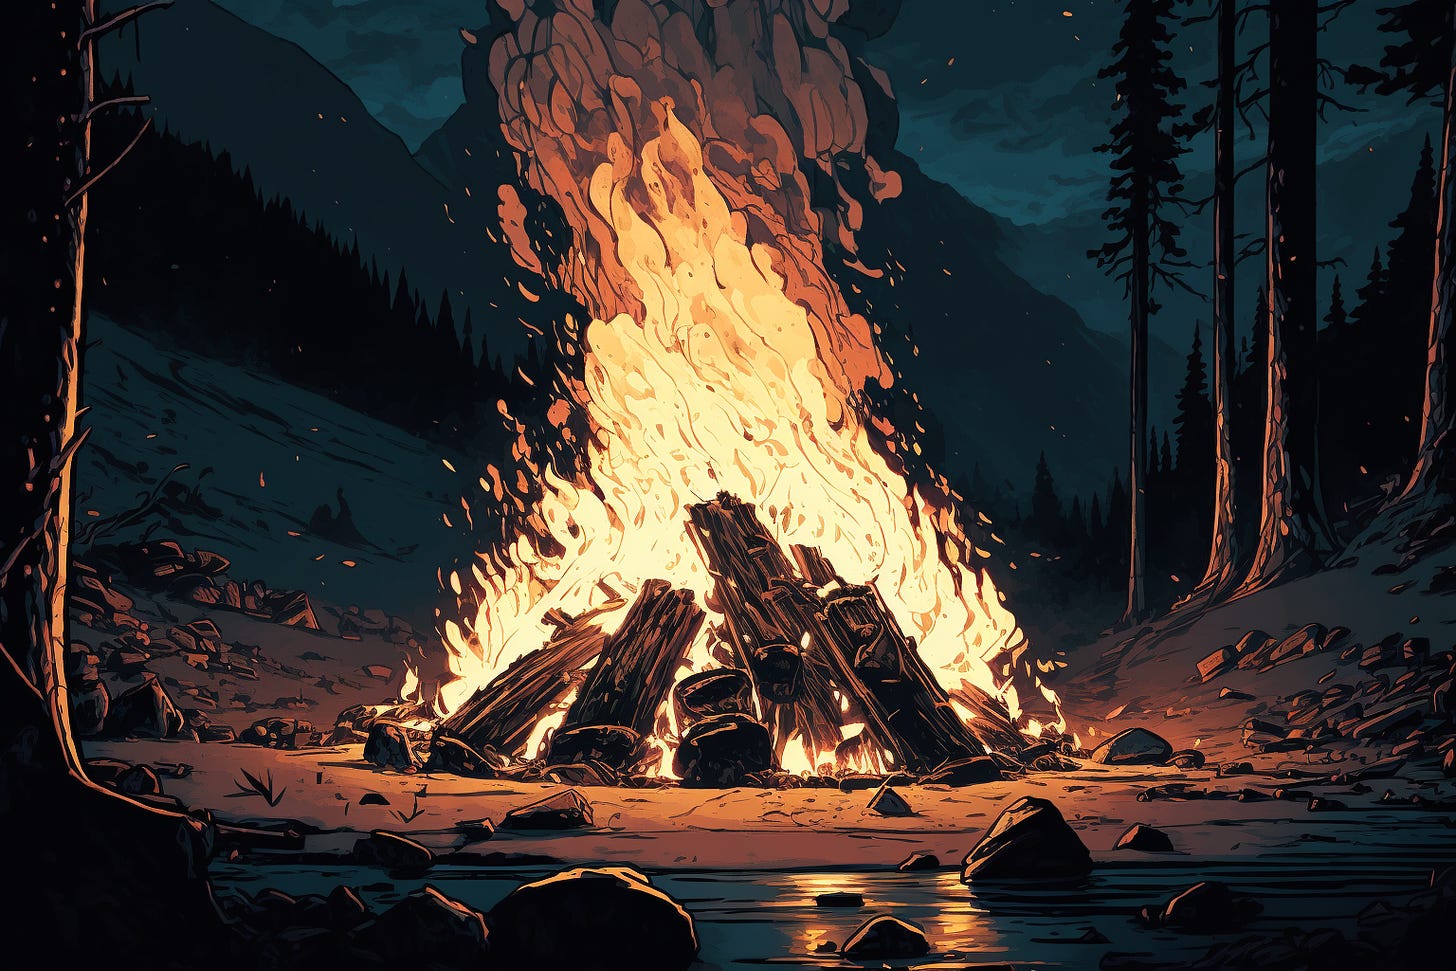 A raging fire, graphic novel